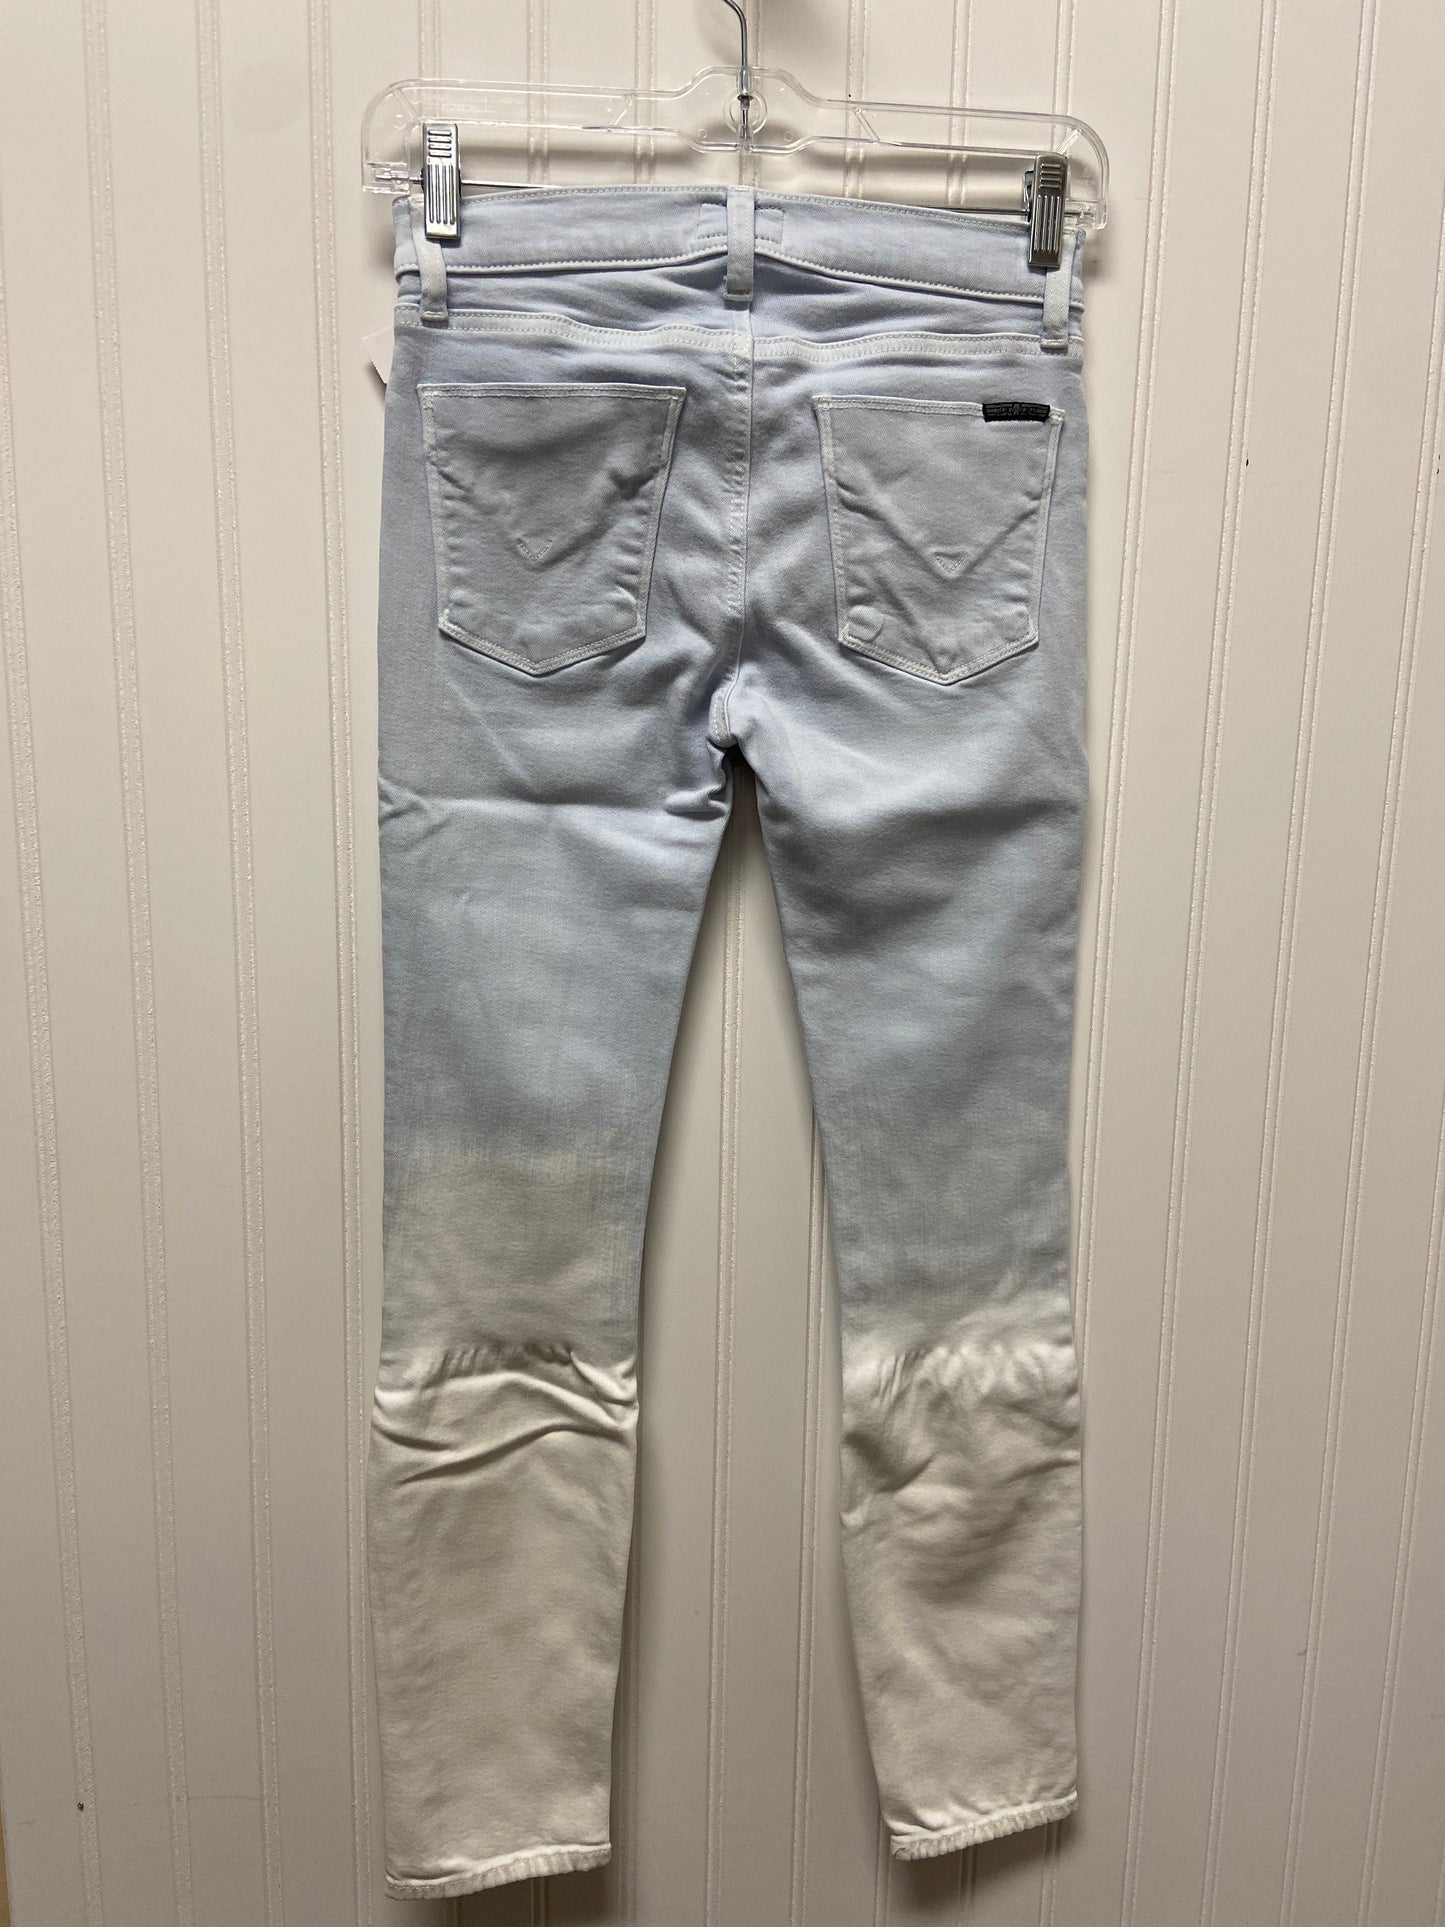 Tie Dye Print Jeans Designer Hudson, Size 2